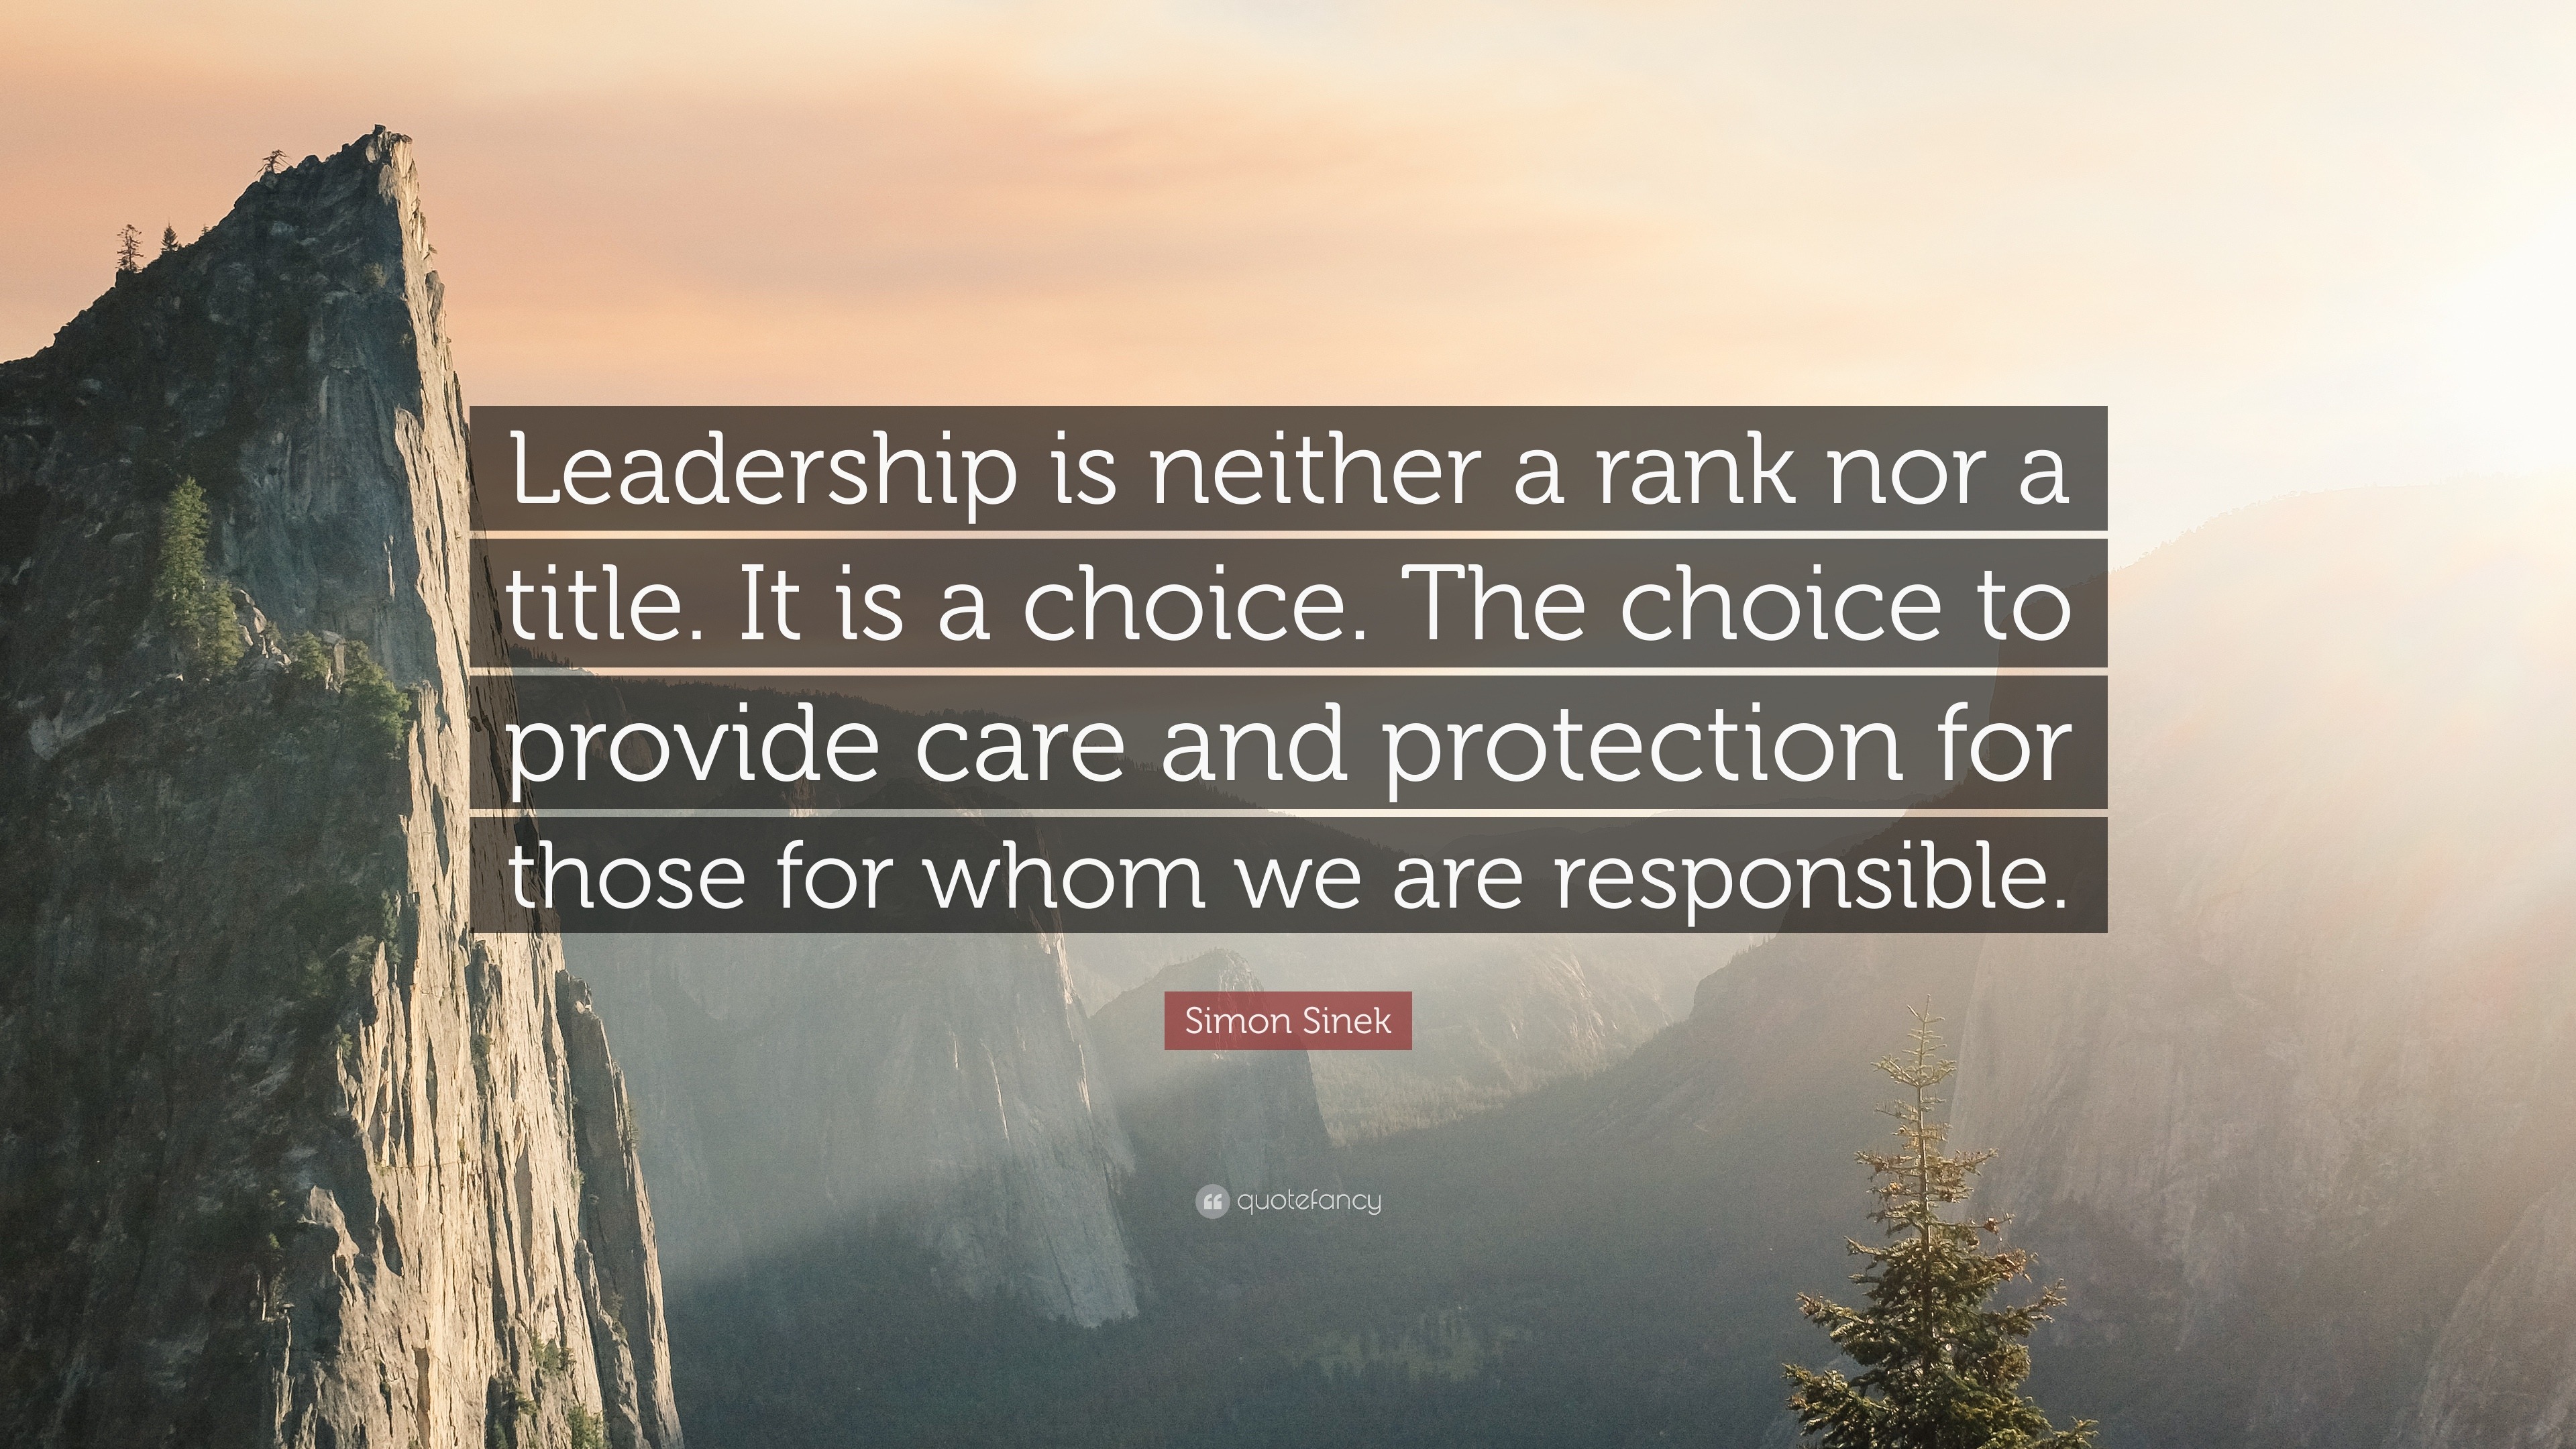 Simon Sinek Quote About Leadership